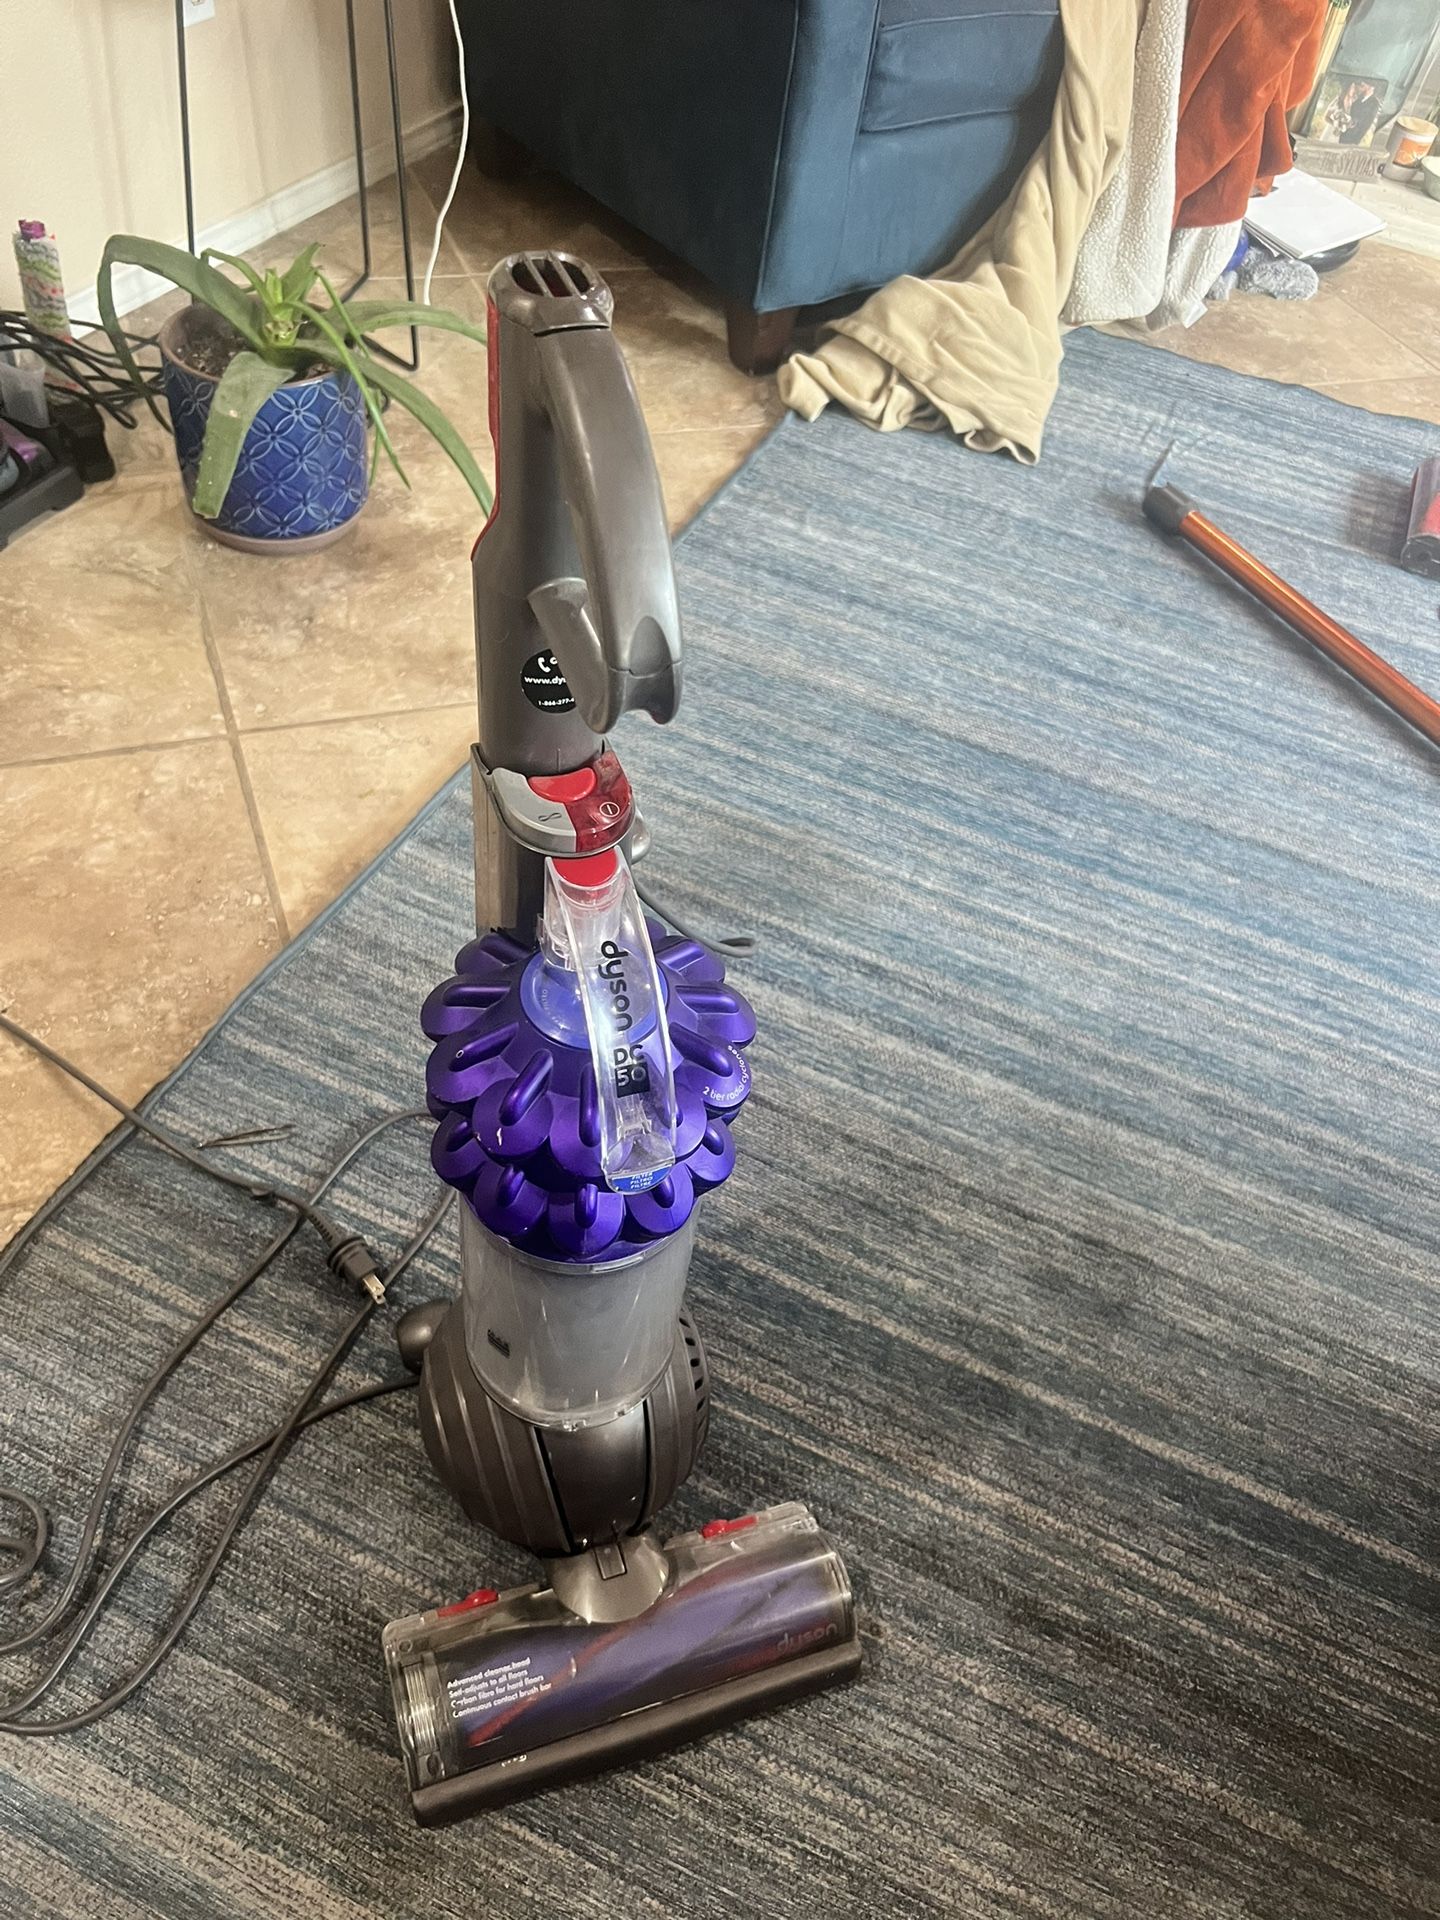 Dyson DC50 Corded Vacuum